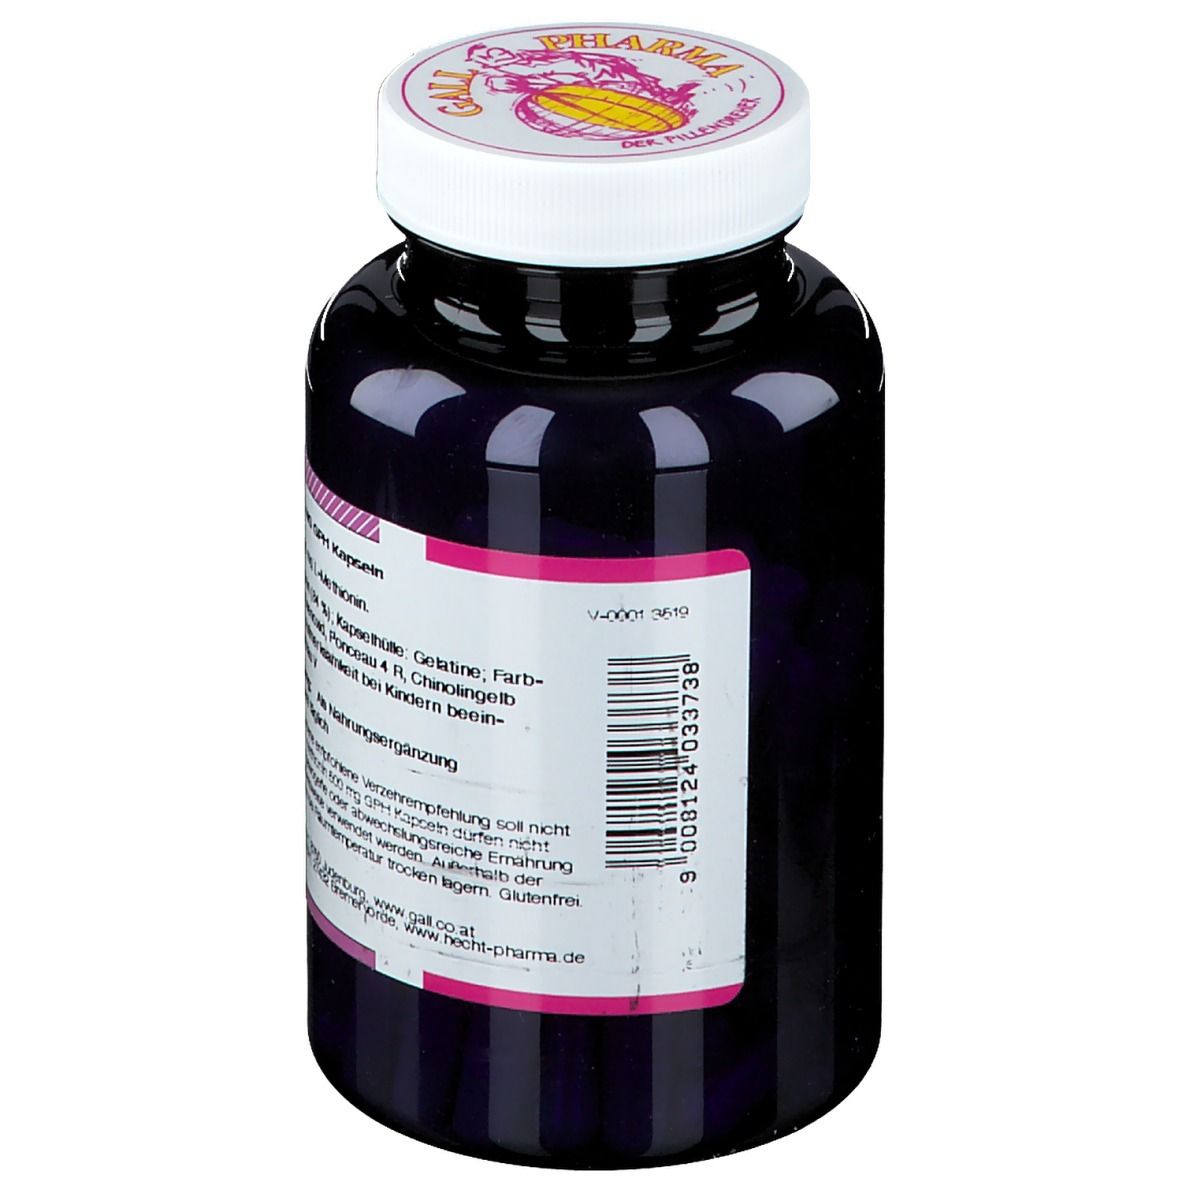 GALL PHARMA Methionin 500 mg GPH Kapseln